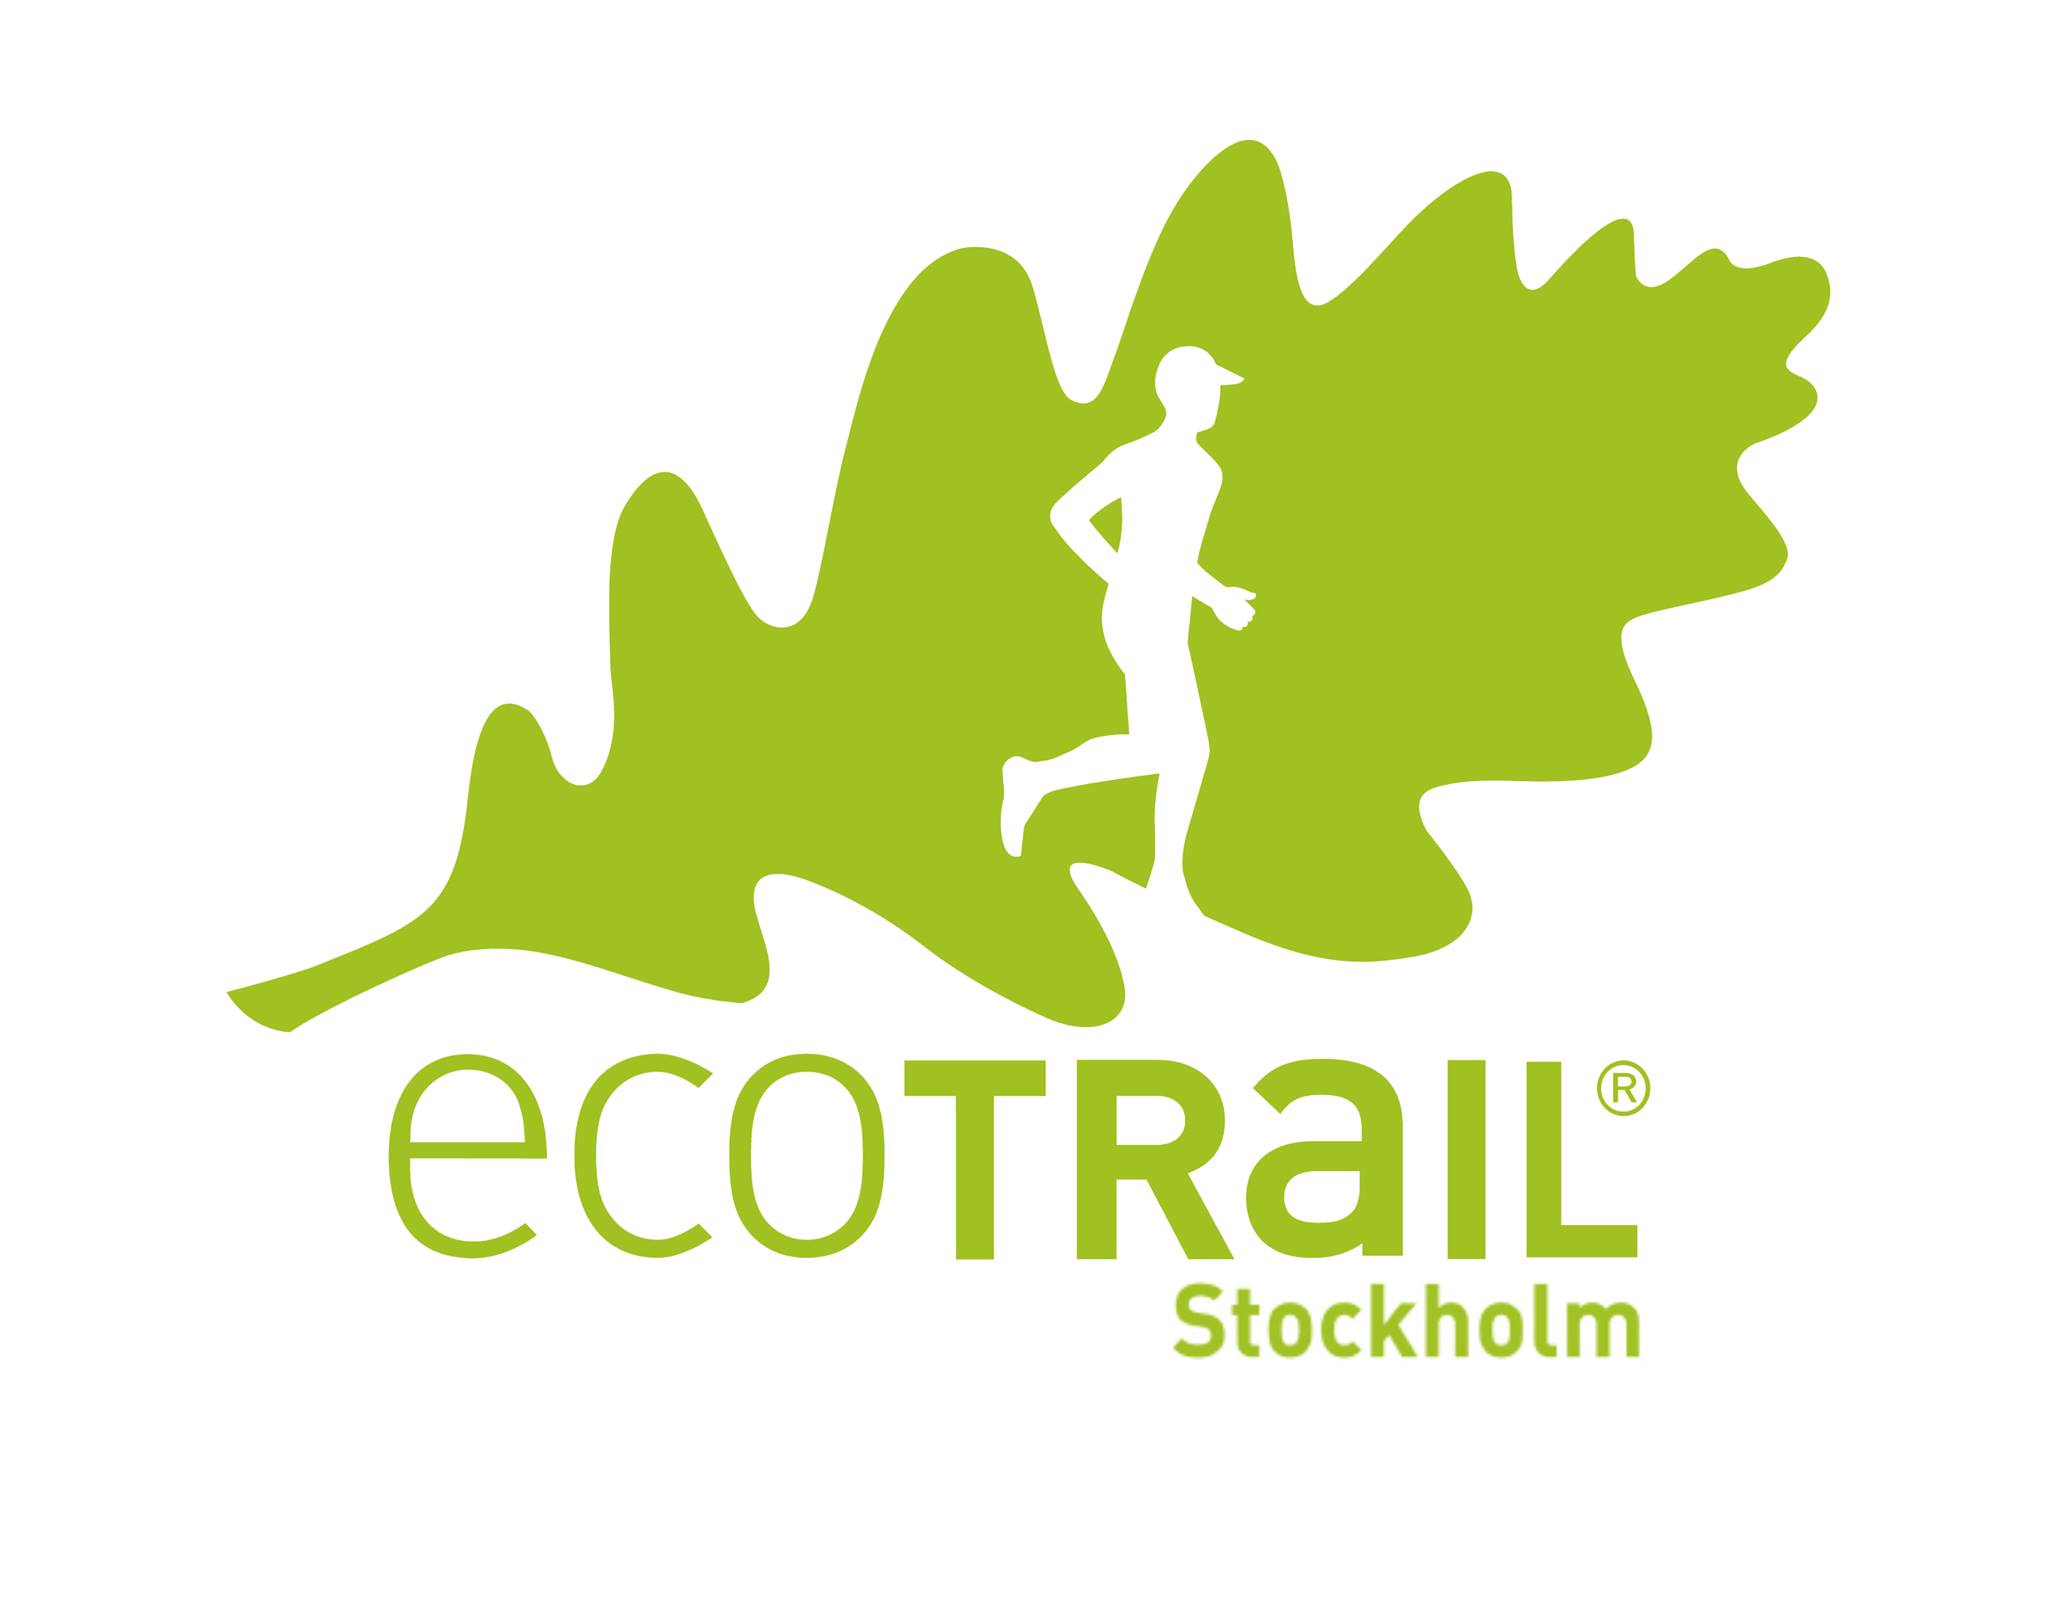 Ecotrail Stockholm